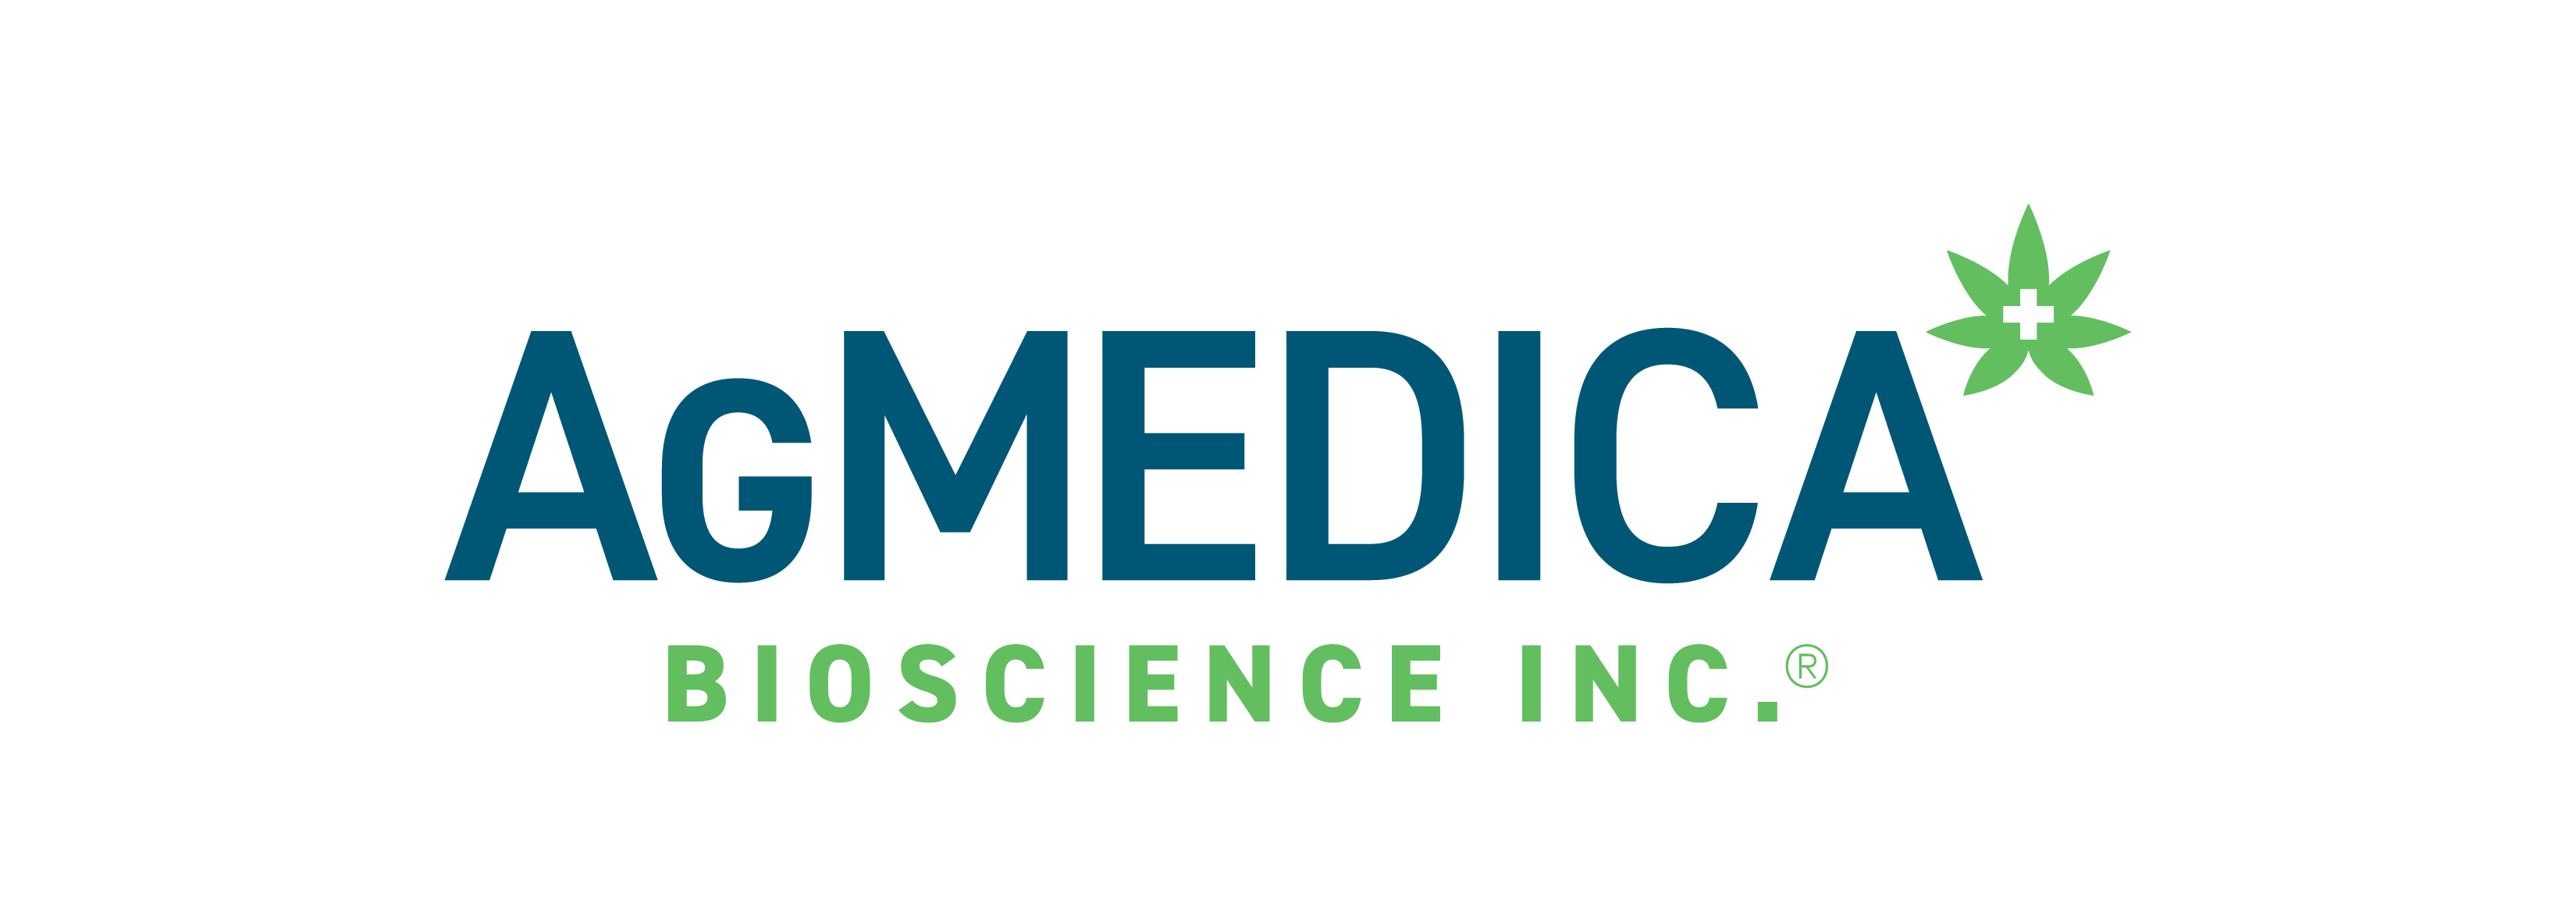 AgMedica Bioscience